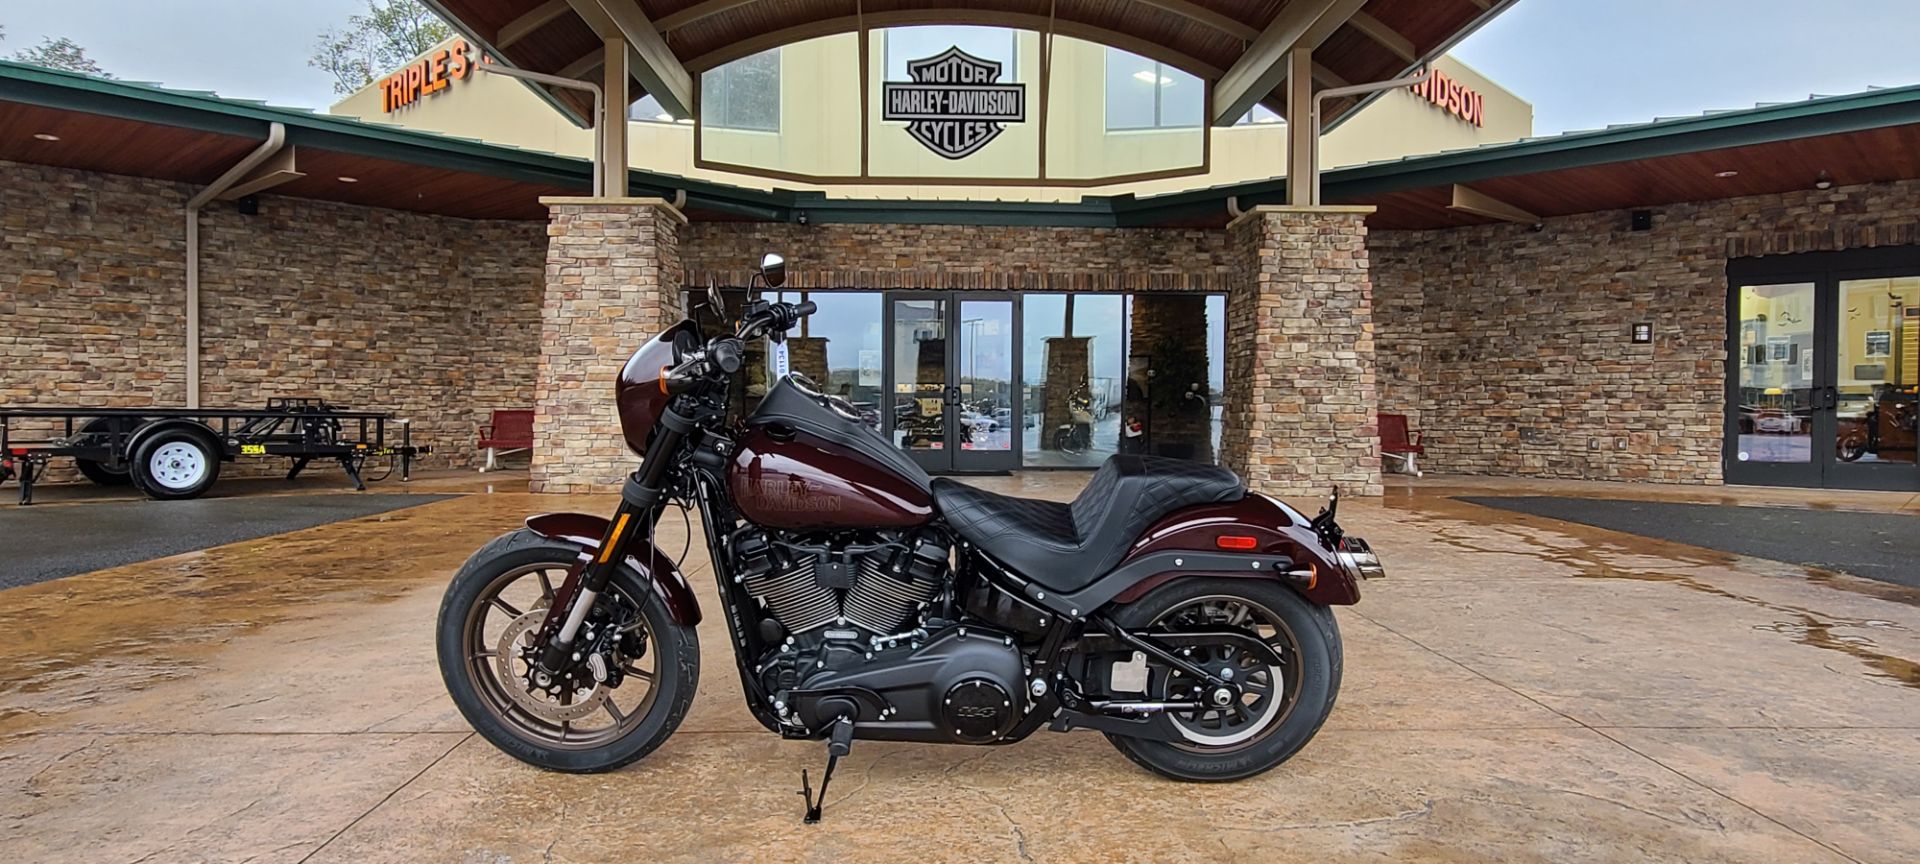 2021 Harley-Davidson Low Rider®S in Morgantown, West Virginia - Photo 2